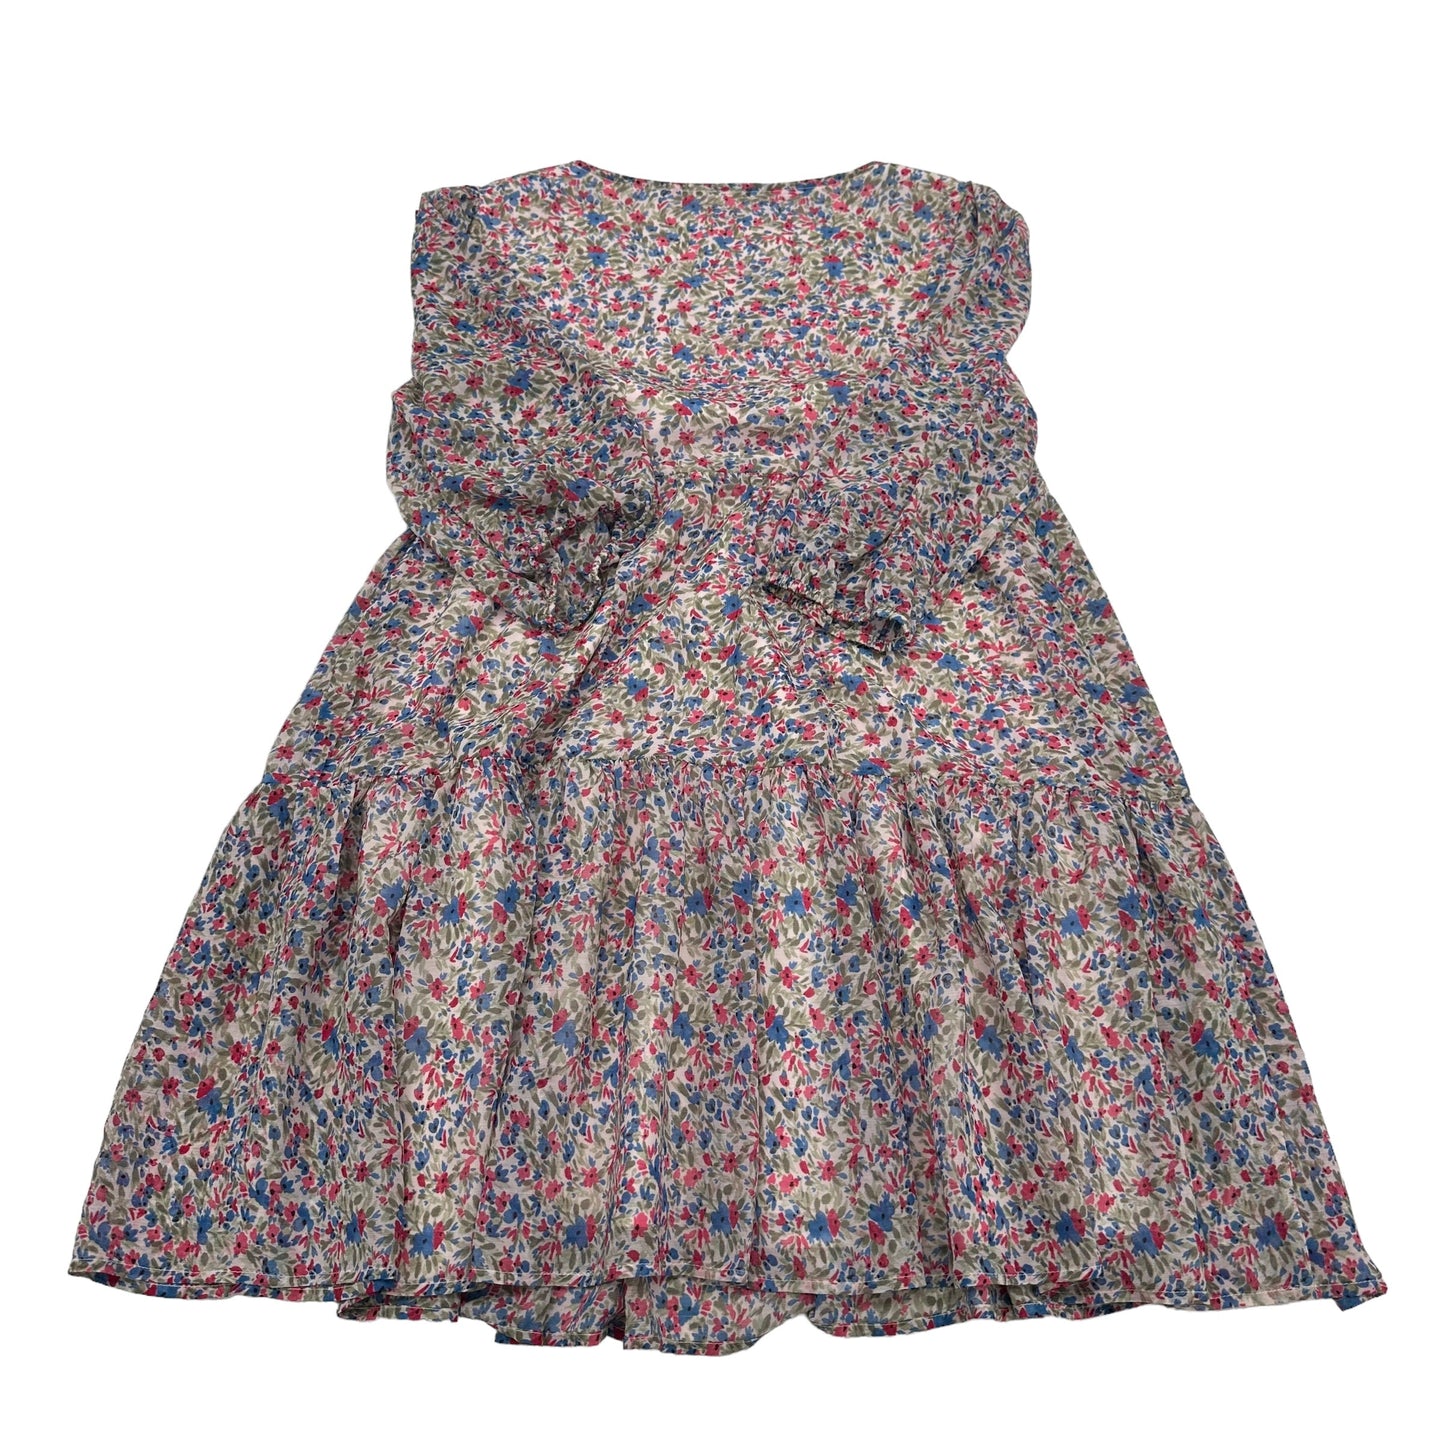 Dress Casual Short By Bb Dakota  Size: Xs